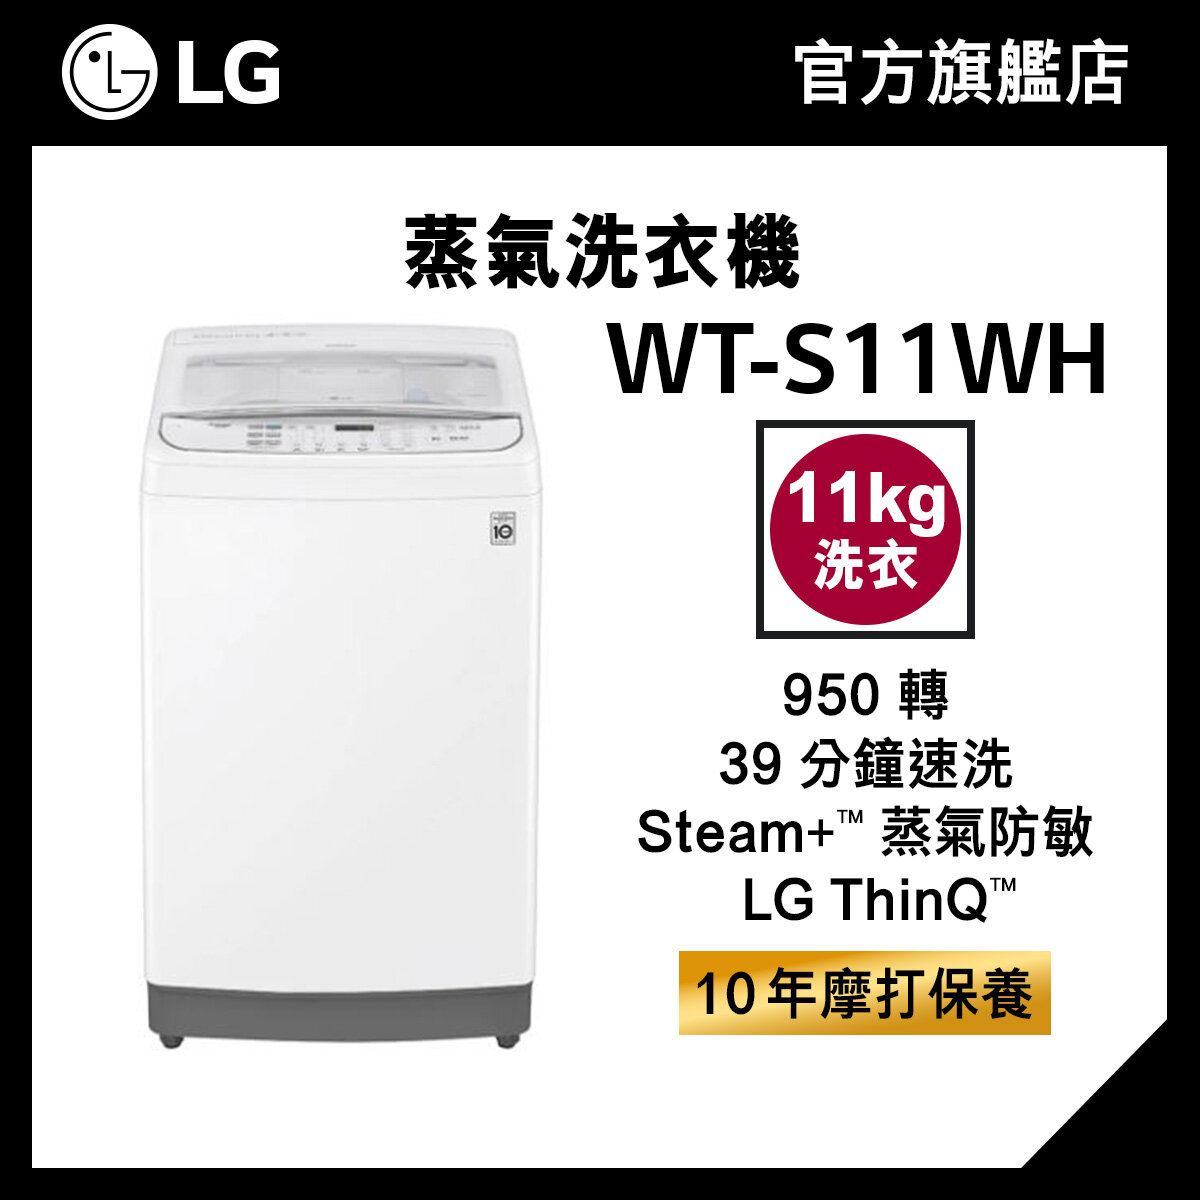 LG 11KG 950 轉 TurboWash3D™ 蒸氣洗衣機 WT-S11WH